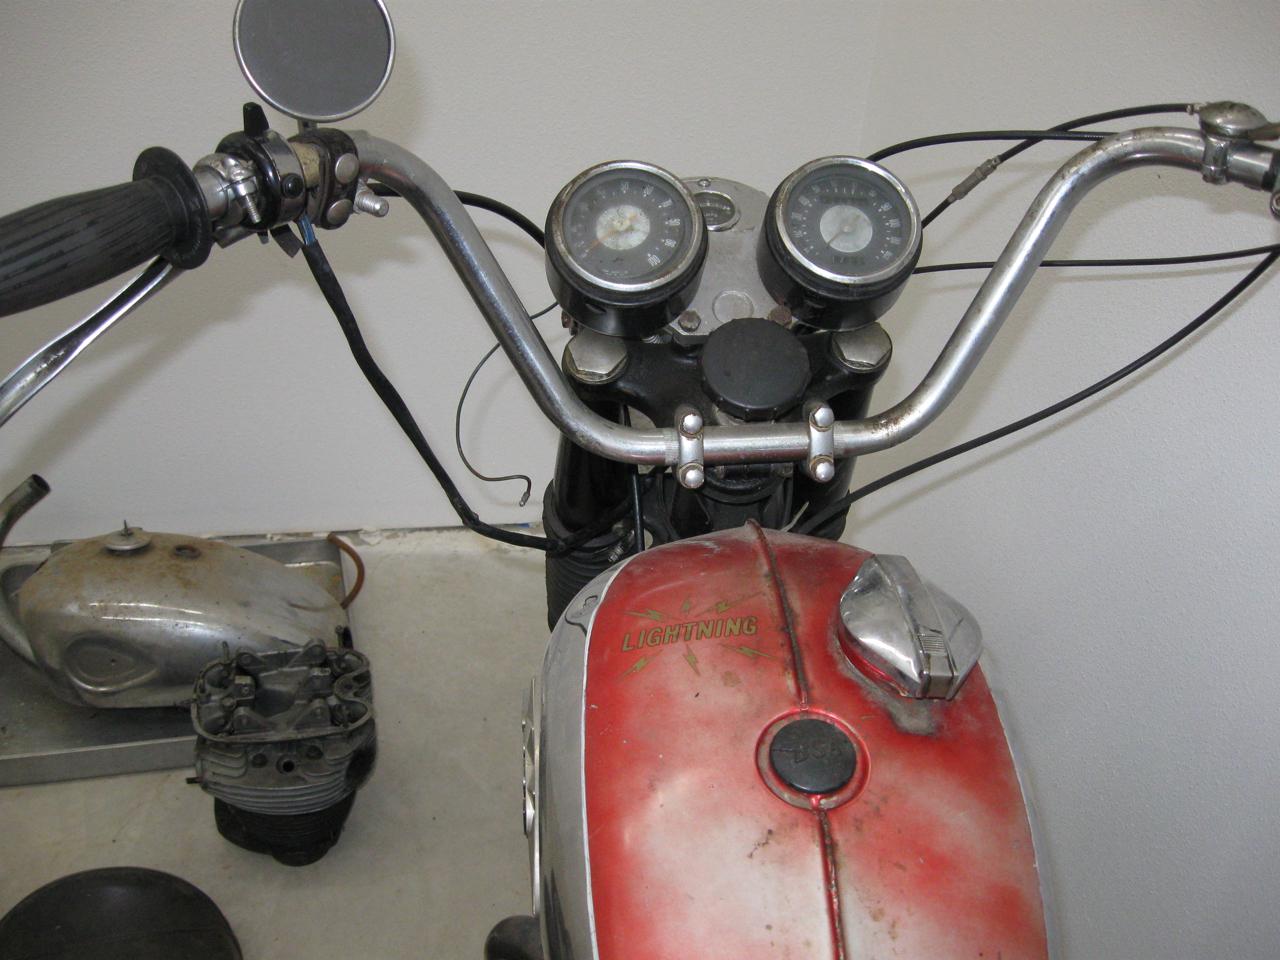 BSA-Motorcycle-1967